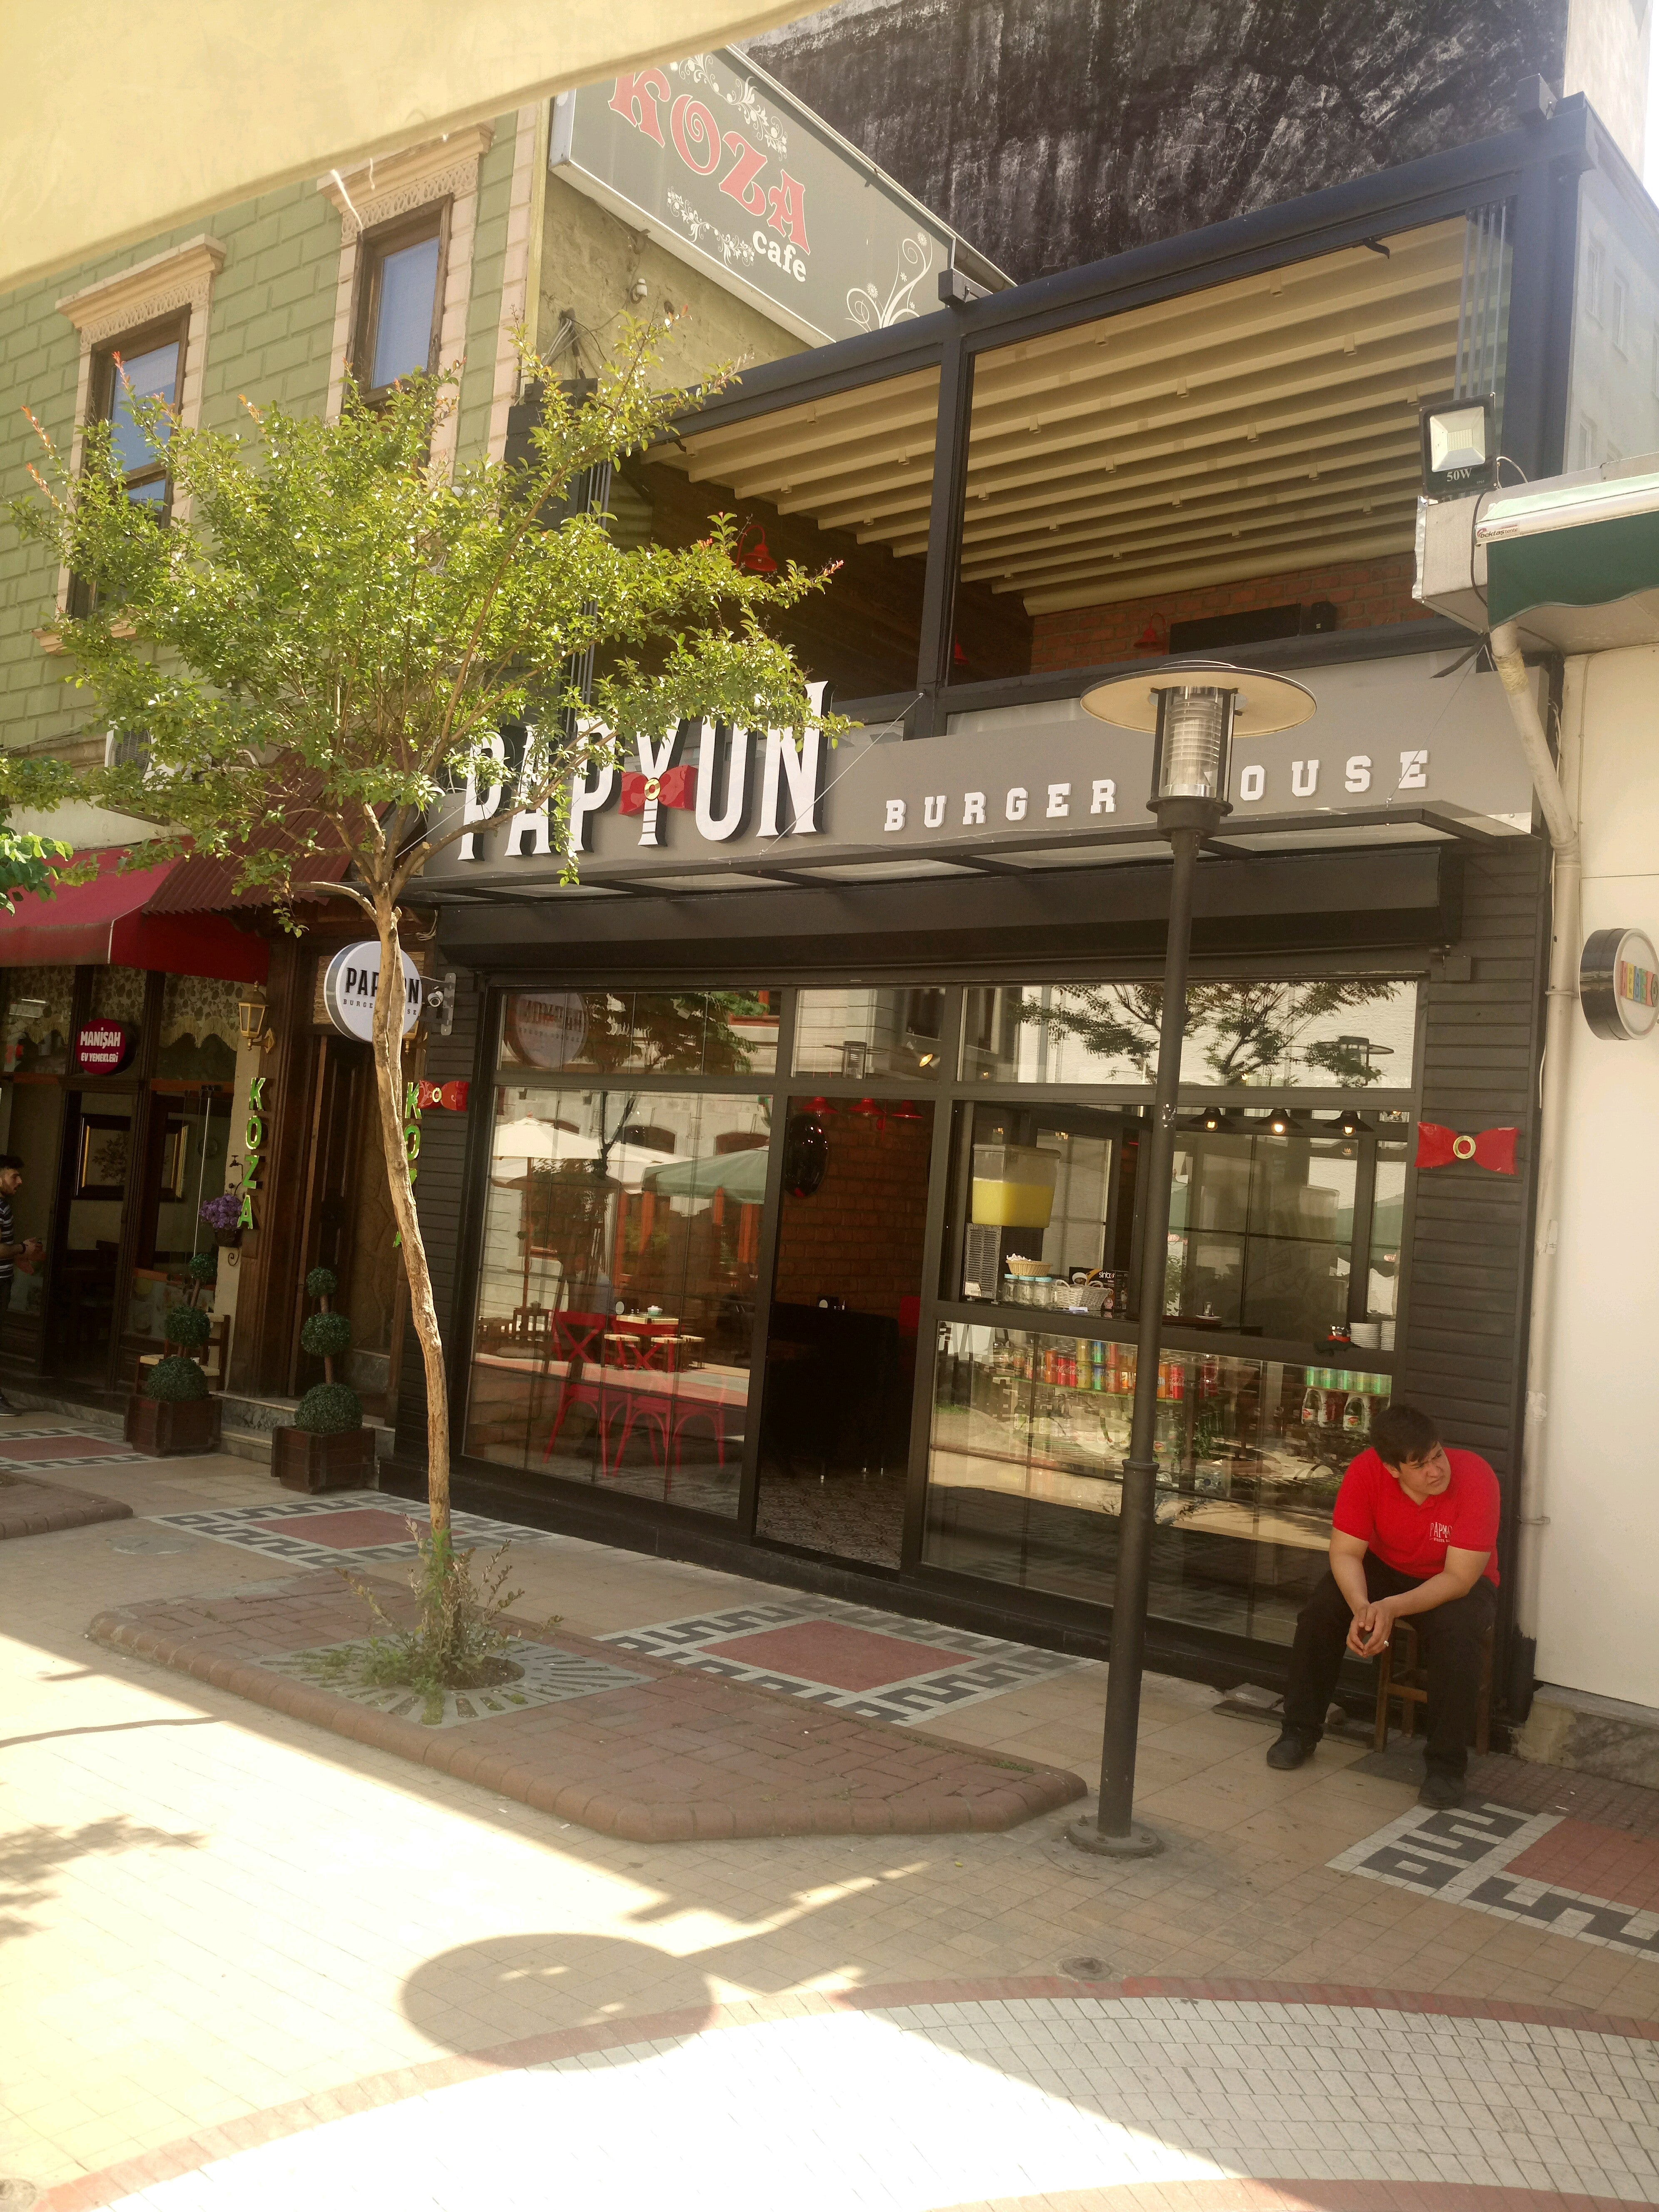 Papyon Burger House